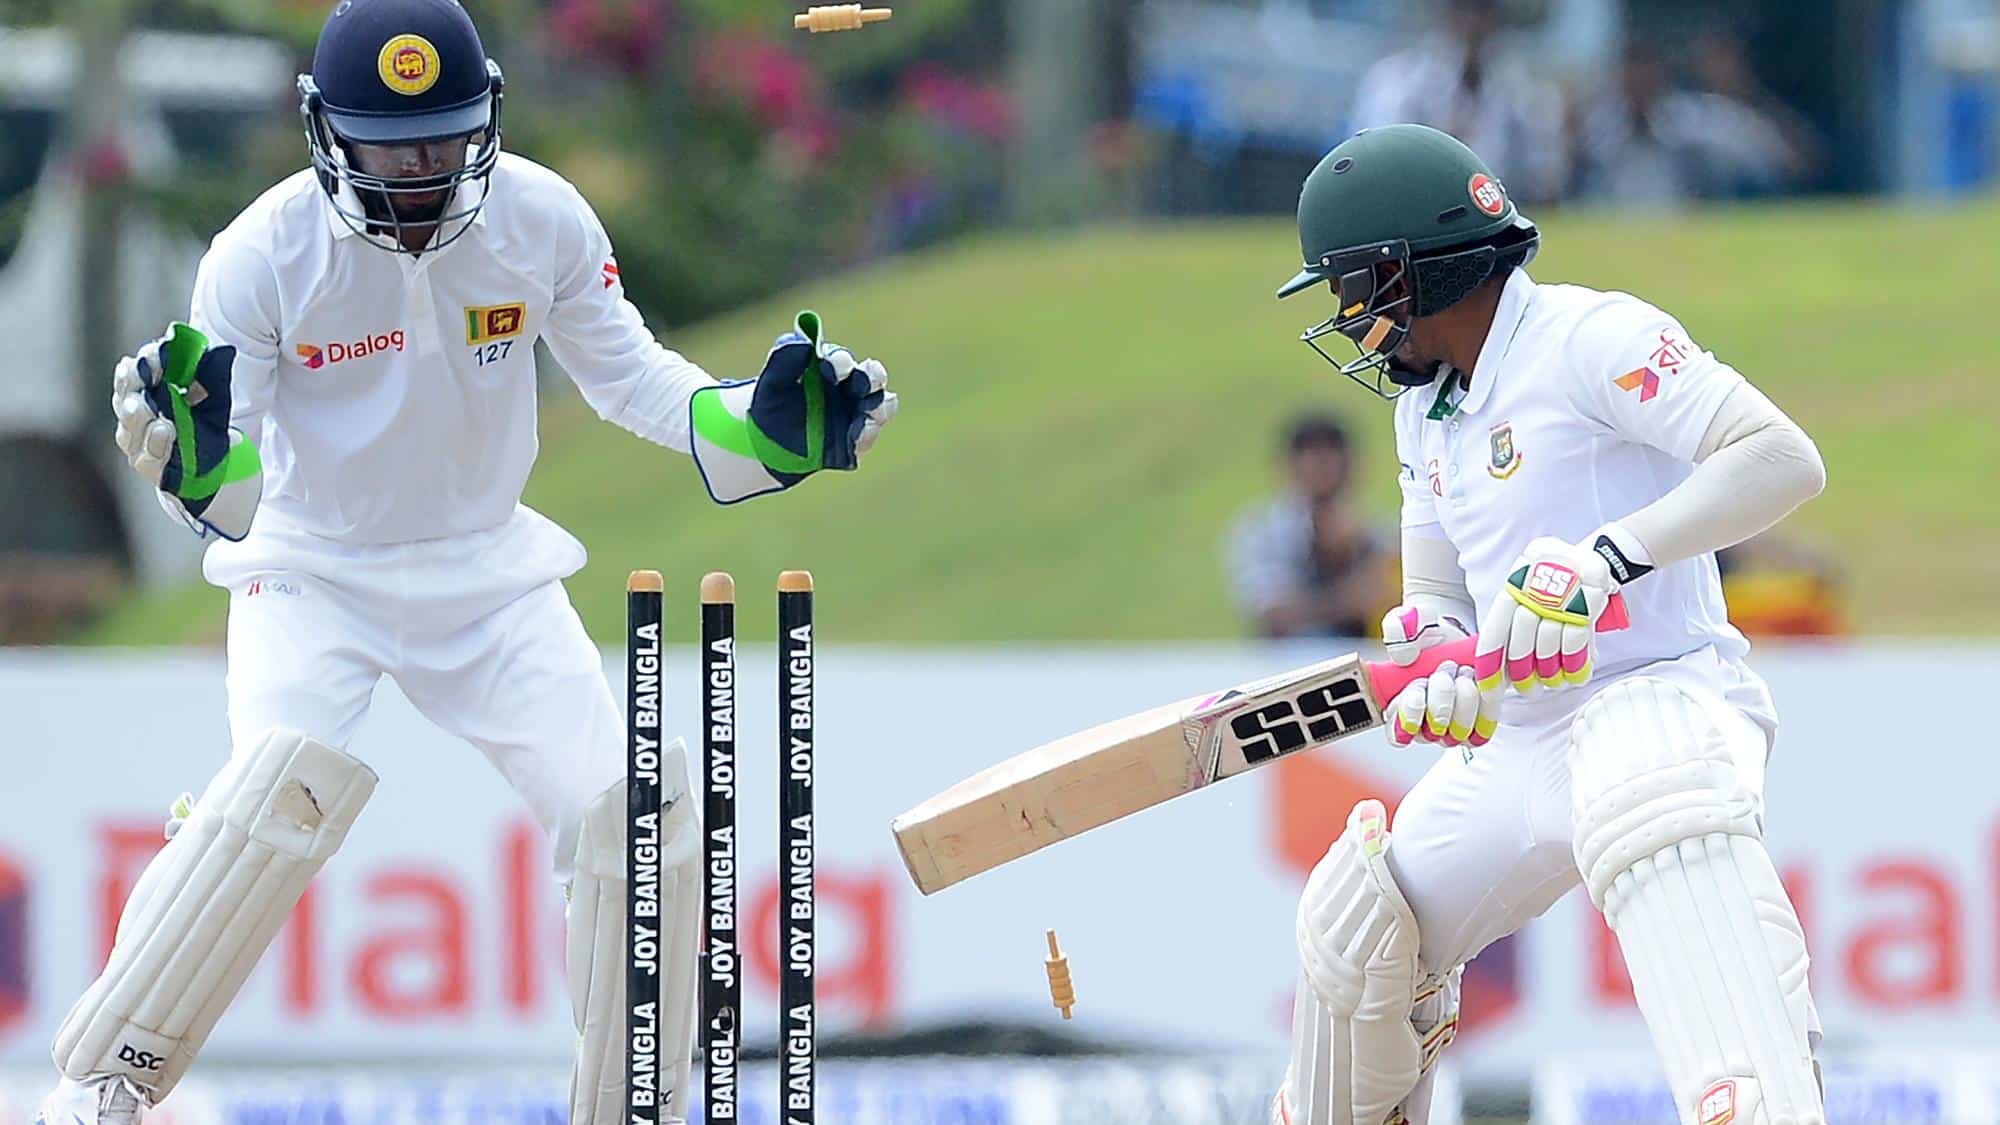 Lankan bowlers first 12 balls may pose danger to Bangladesh